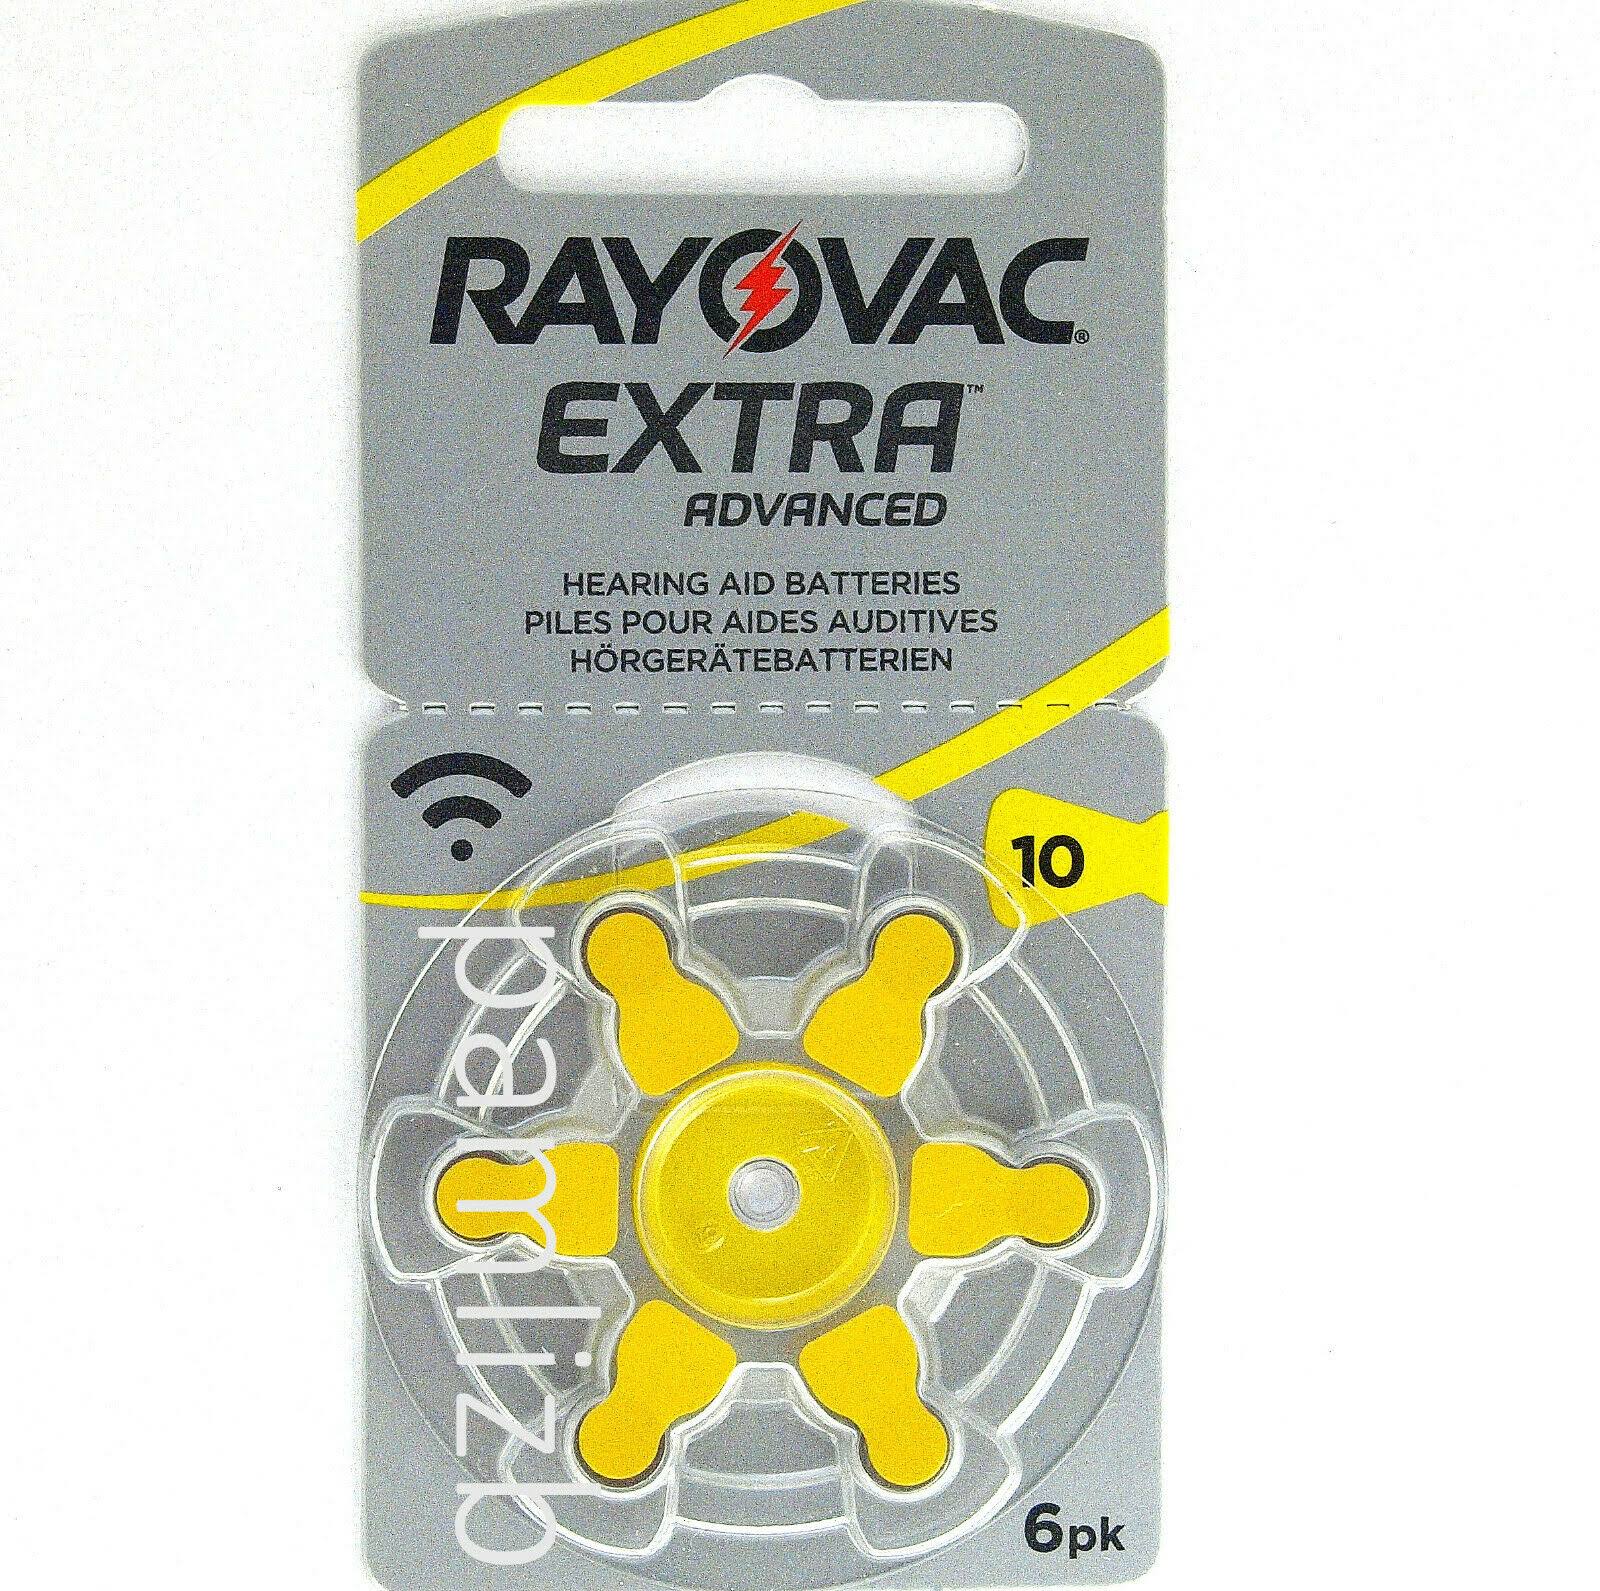 Rayovac 480 Extra Advanced Size 10 Pr70 Hearing Aid Batteries 1.45V Zinc Air